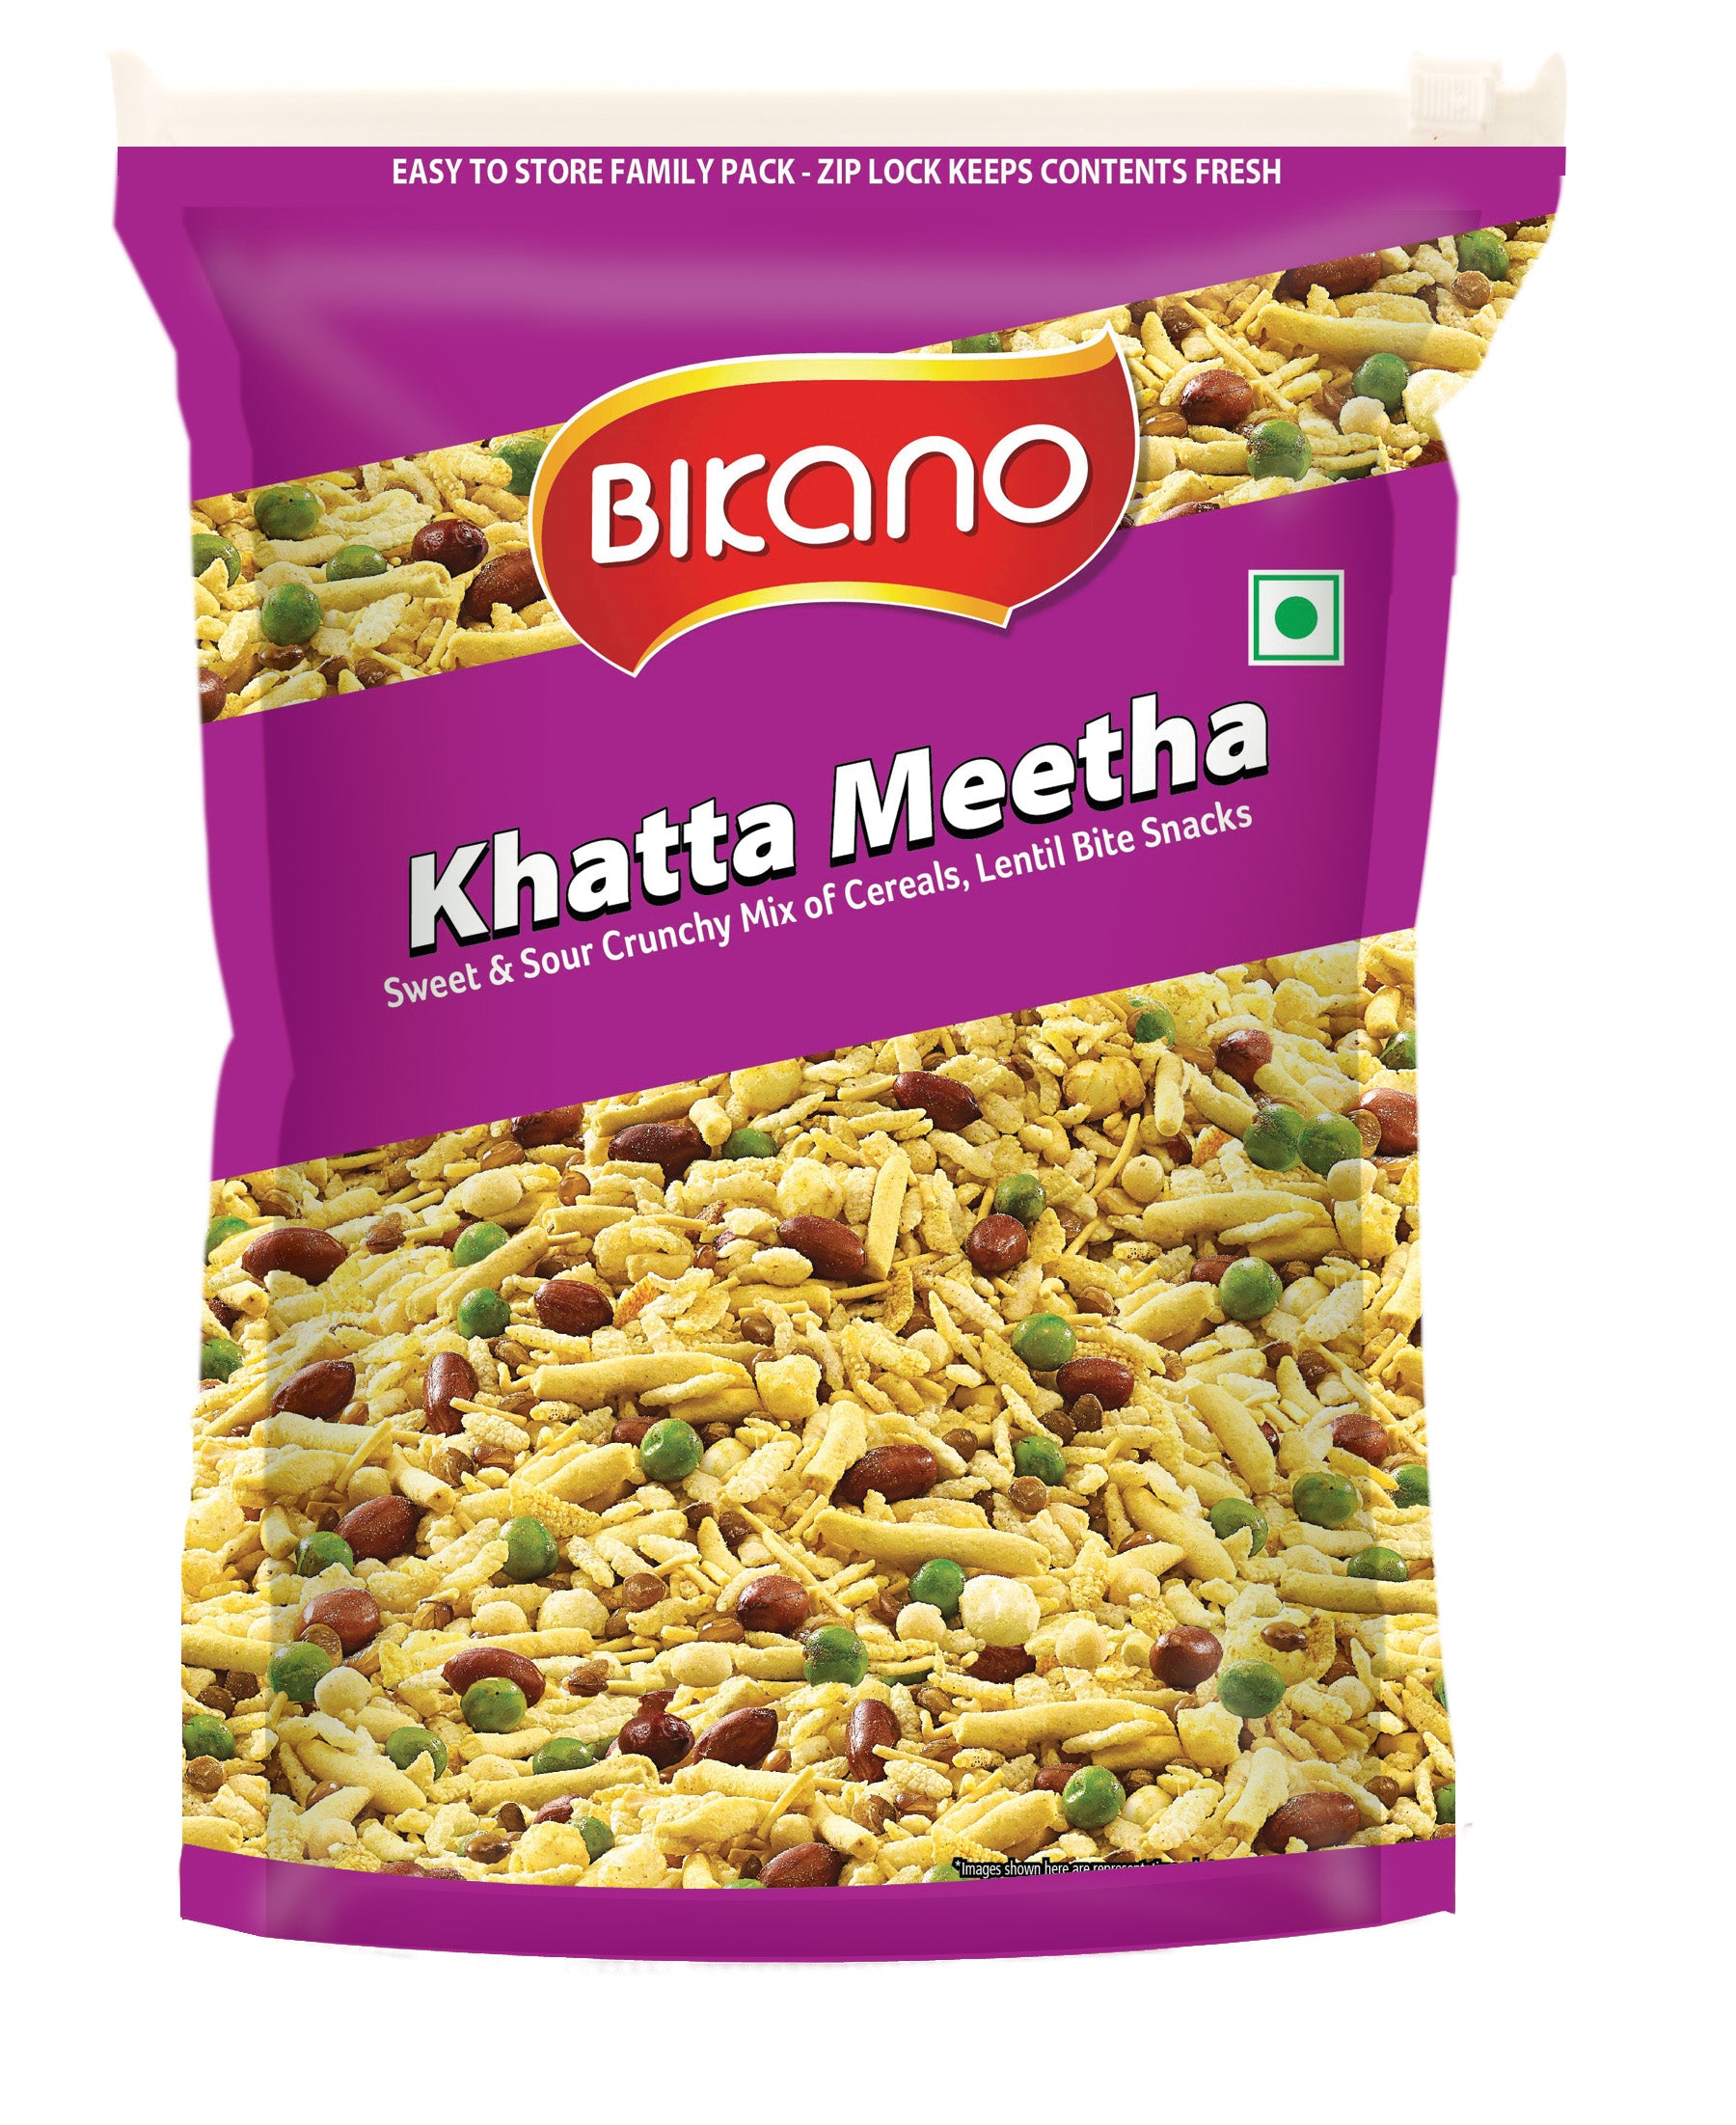 Bikano Khatta Meetha - 0